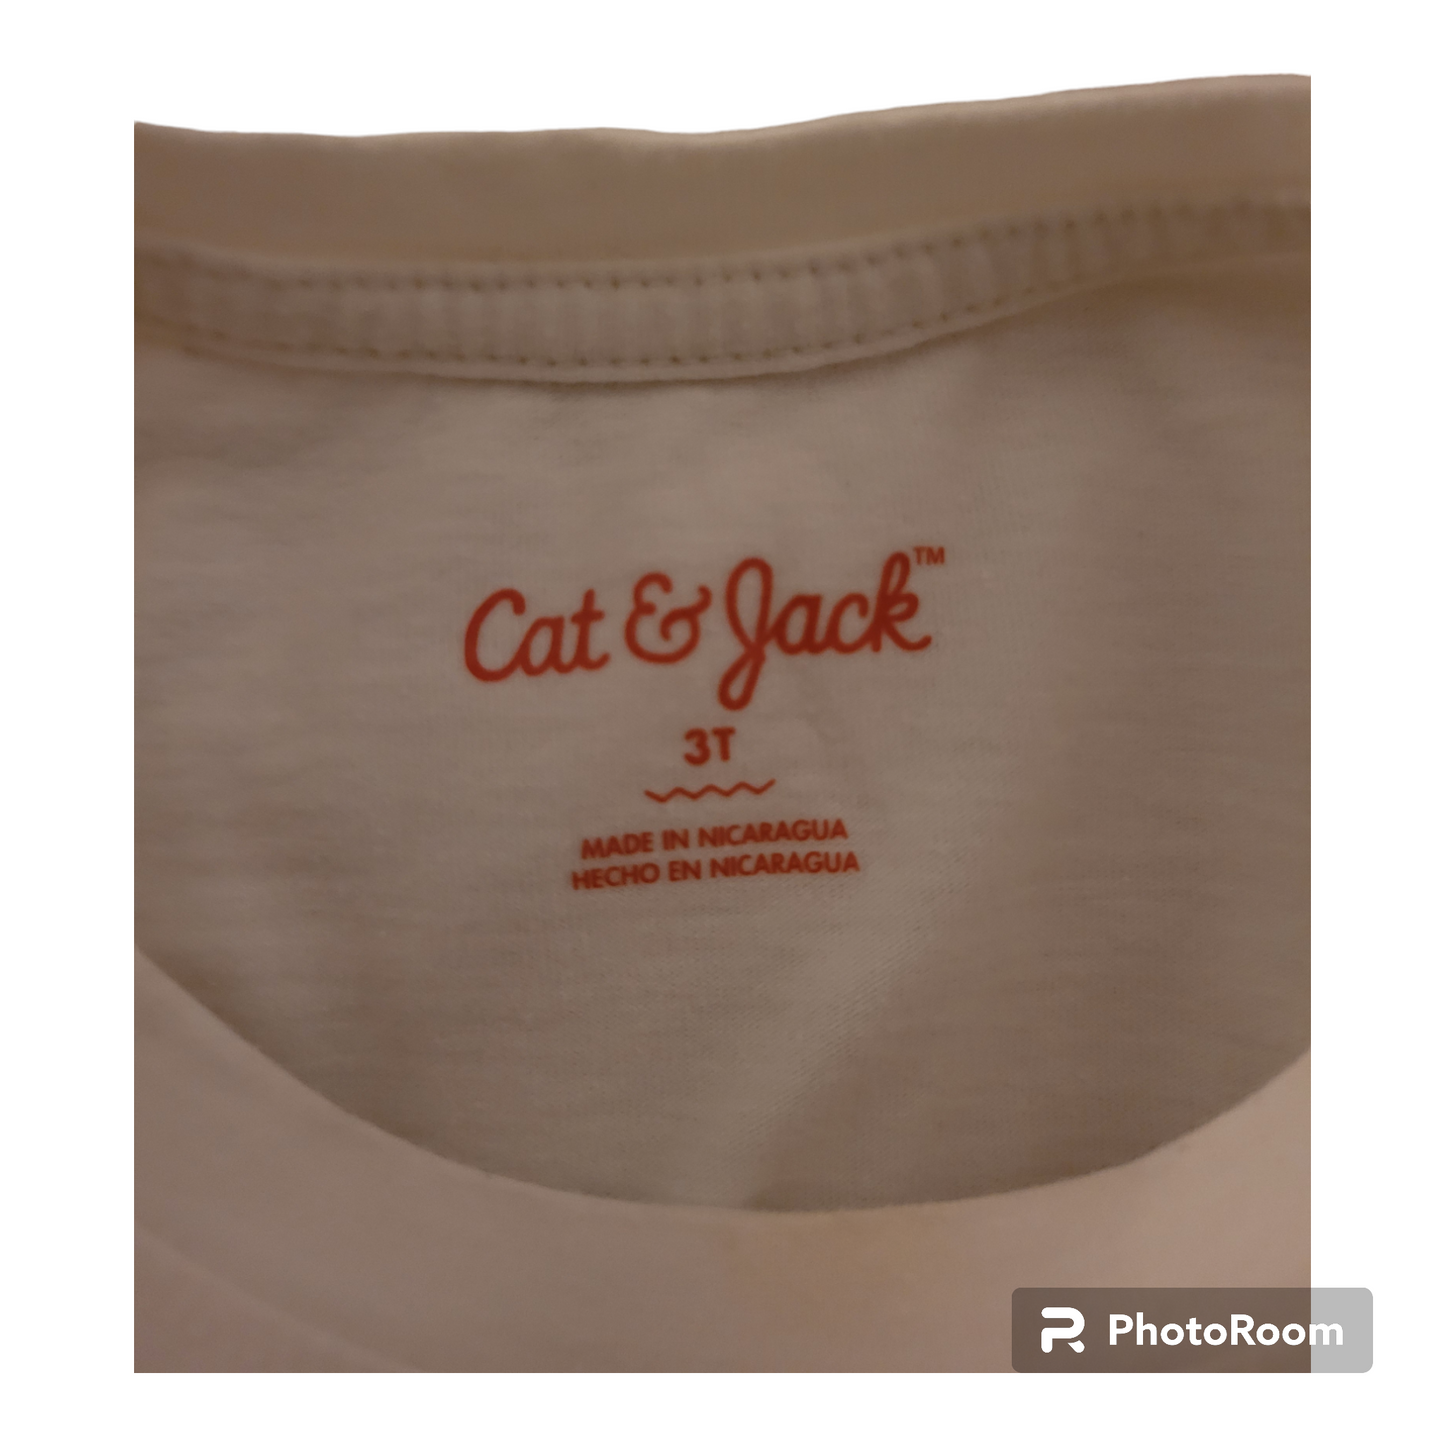 Cat & Jack Girls Long Sleeve Shirt, size 3T